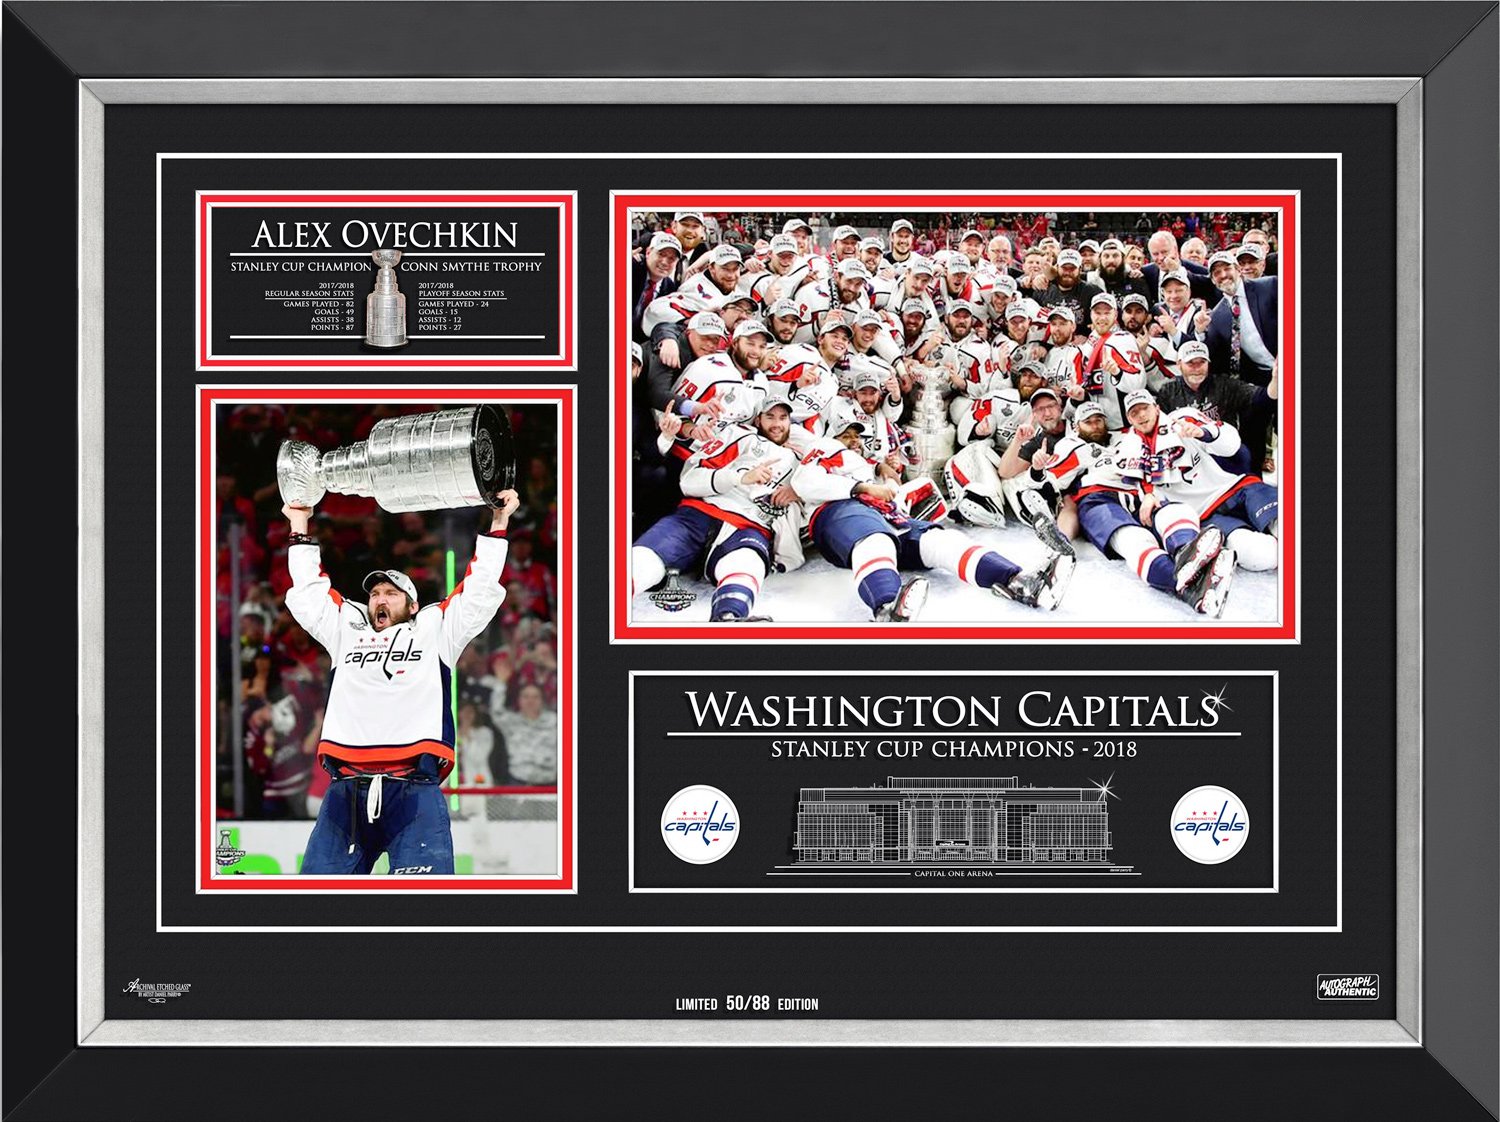 Alexander Ovechkin & Washington Capitals Champs, Ltd Ed /88 - Stanley Cup